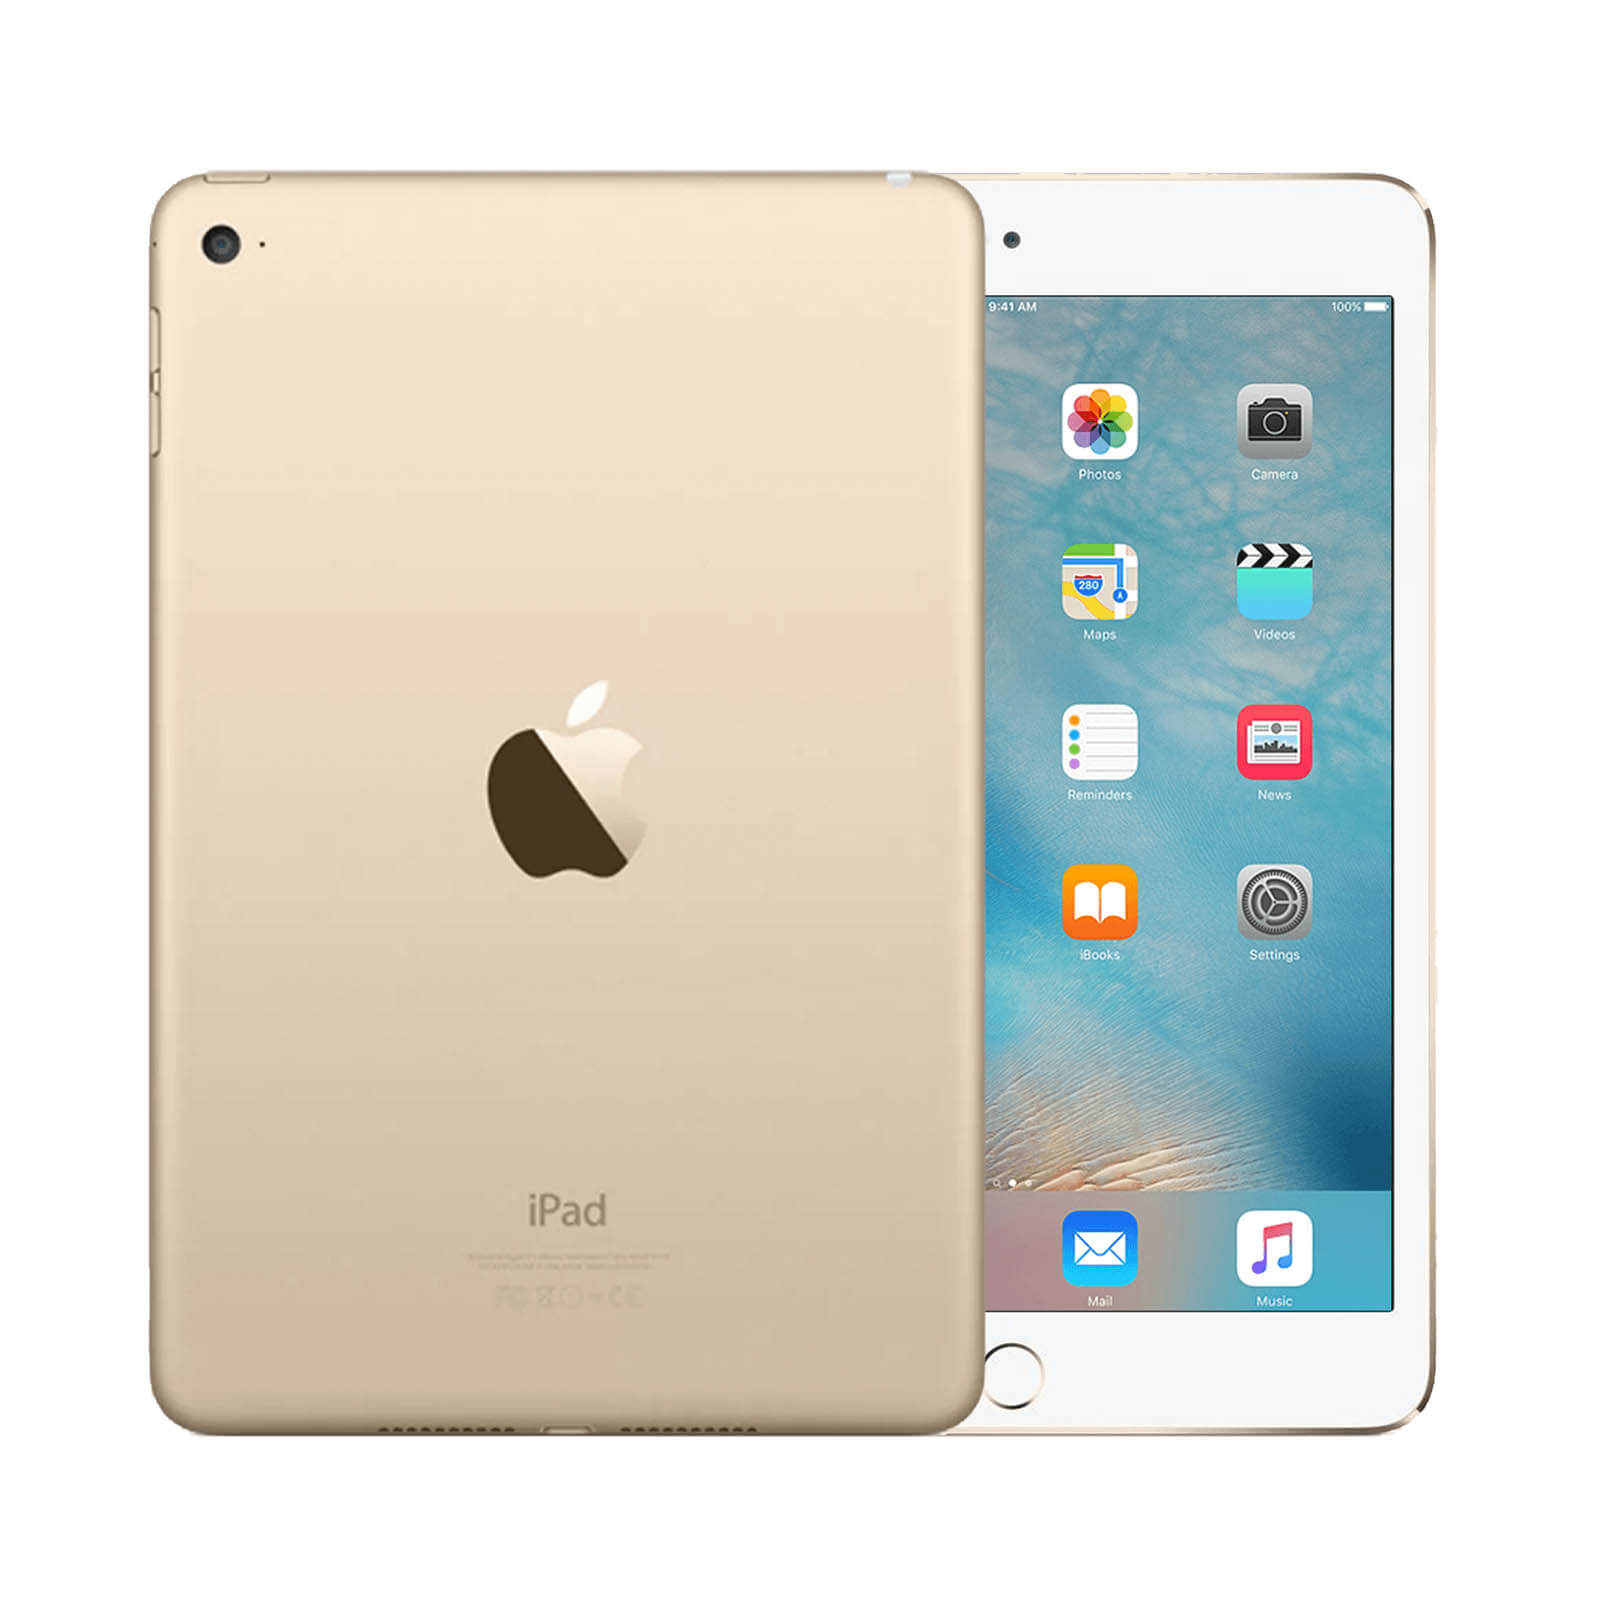 Apple iPad Mini 4 16GB Gold WiFi - Good 16GB Gold Good